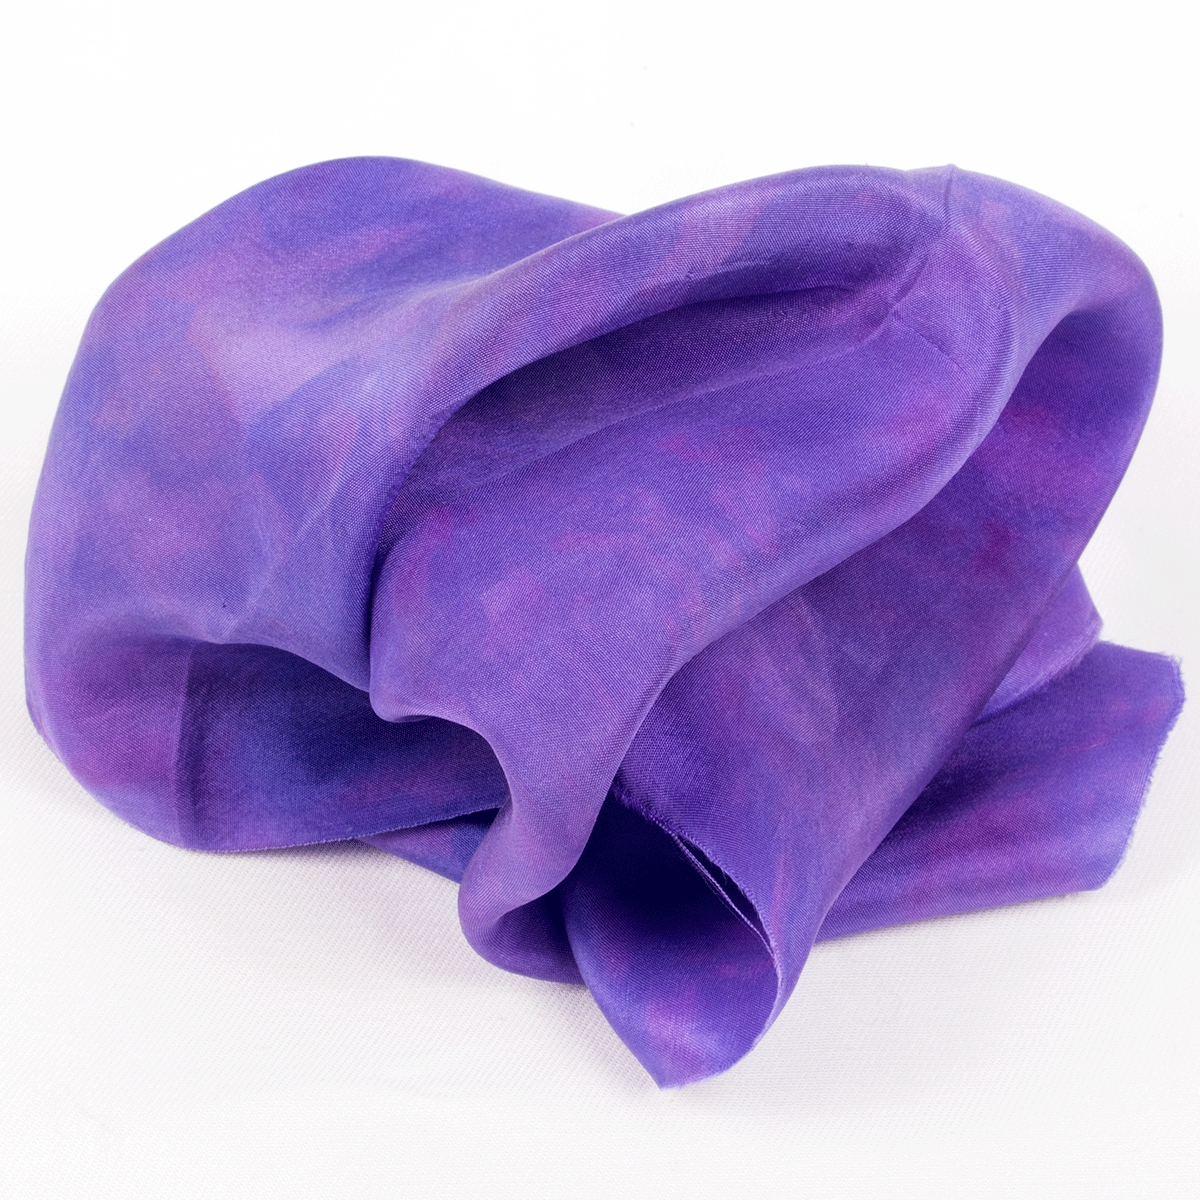 www.colourstreams.com.au Colour Streams Hand Dyed Habotai Silk Purple Genie 21 Habuti Habutai Habotai Habutae Painted Textile Arts Fibre Embroidery Slow Stitching Meditative Australia